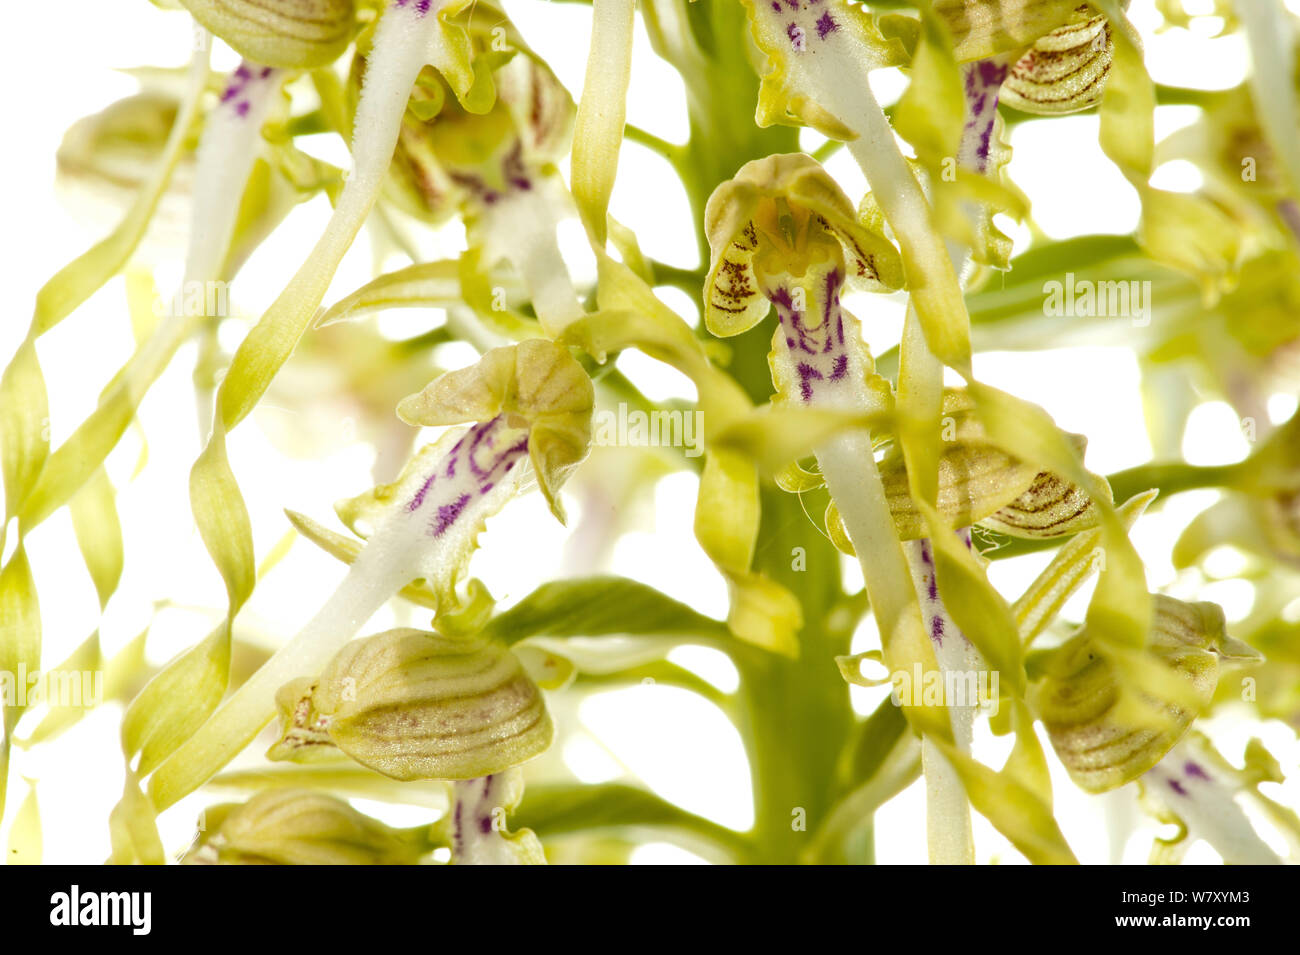 Lizard orchid flowers (Himantoglossum hircinum), Ilbesheim, Rhineland-Palatinate, Germany, May. meetyourneighbours.net project Stock Photo